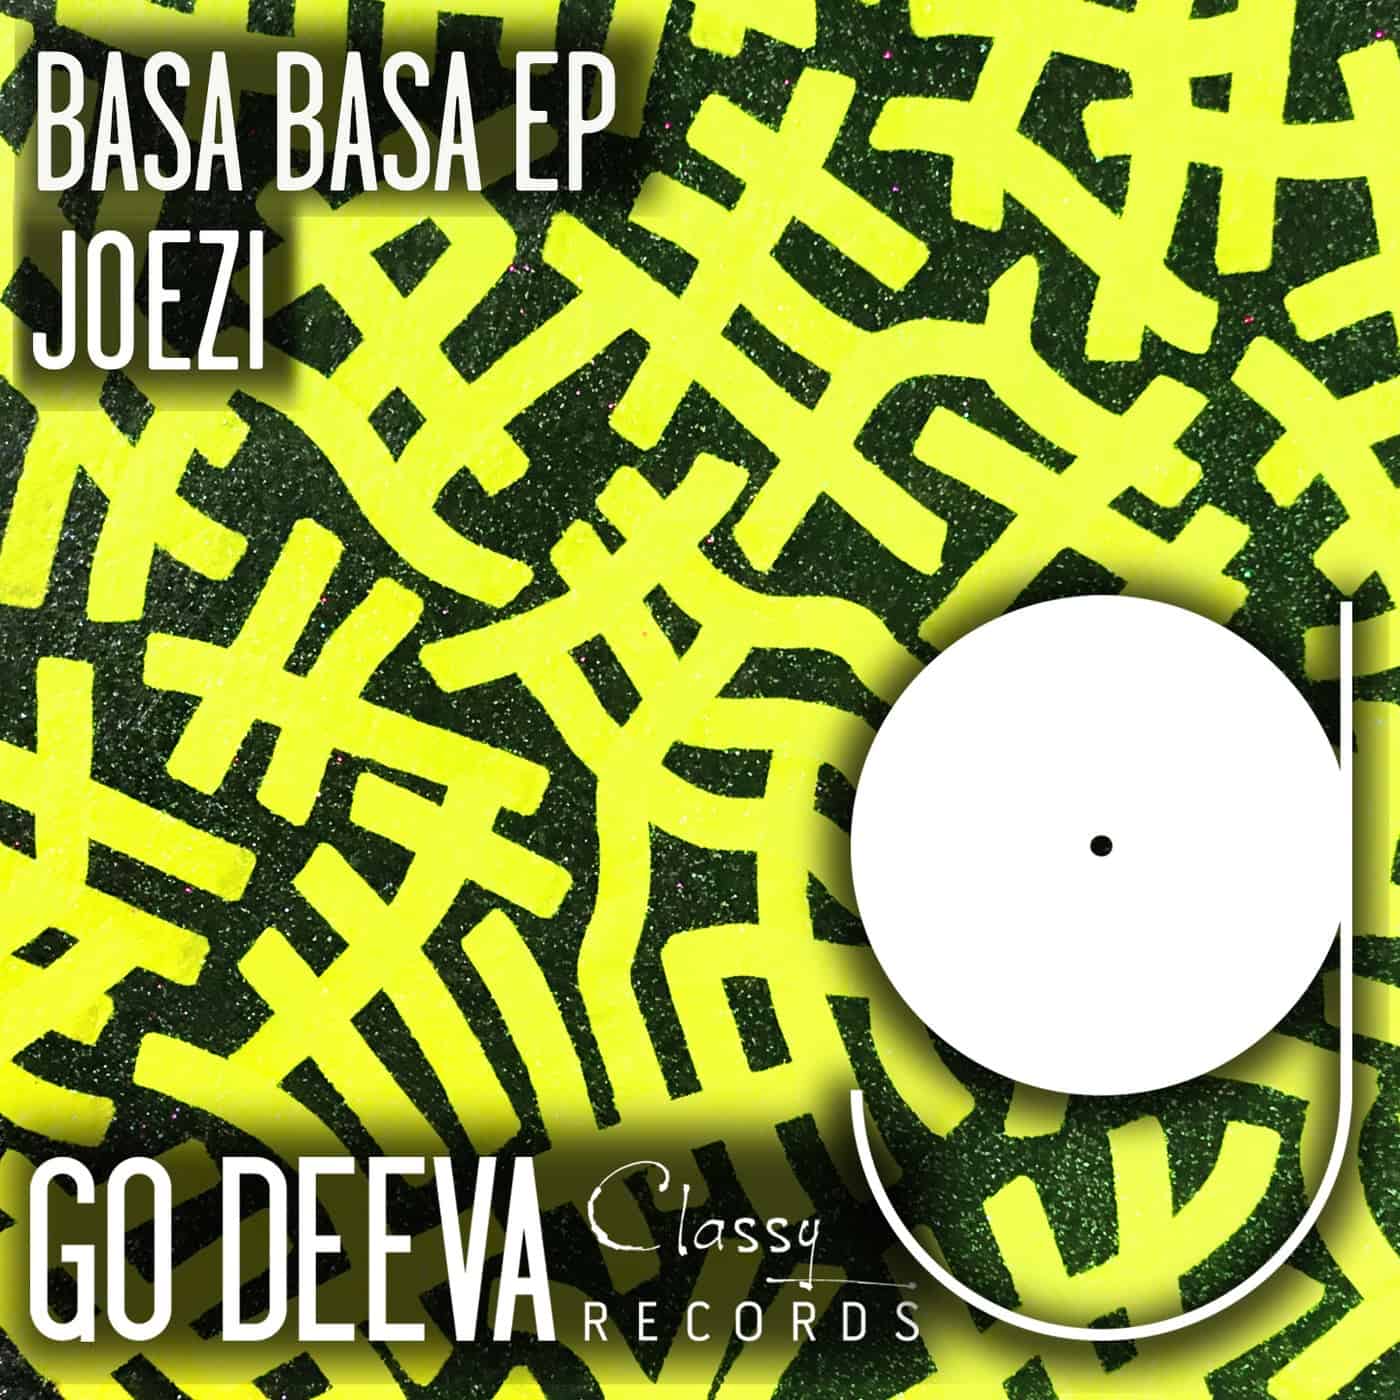 Download Basa Basa Ep on Electrobuzz